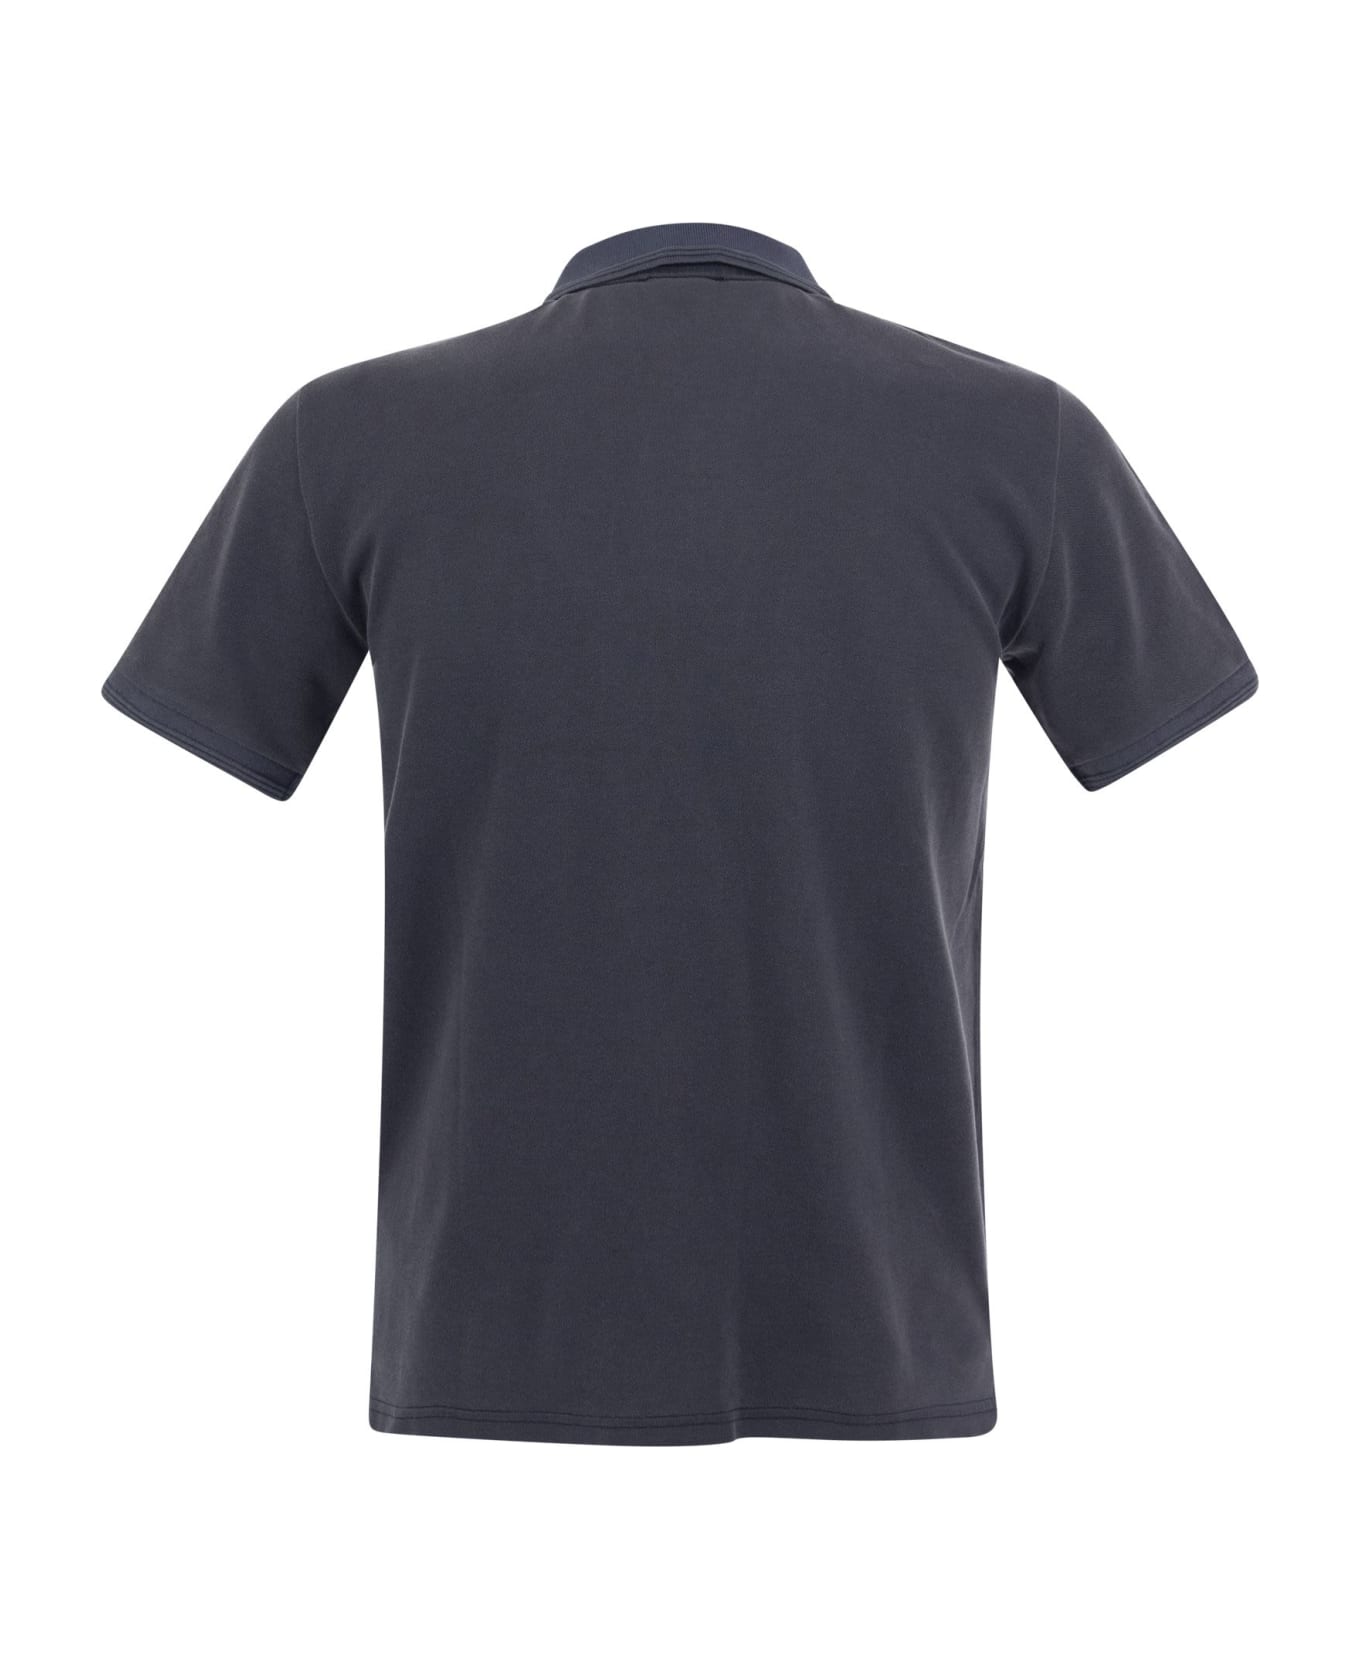 Woolrich Mackinack Cotton Polo Shirt - blue